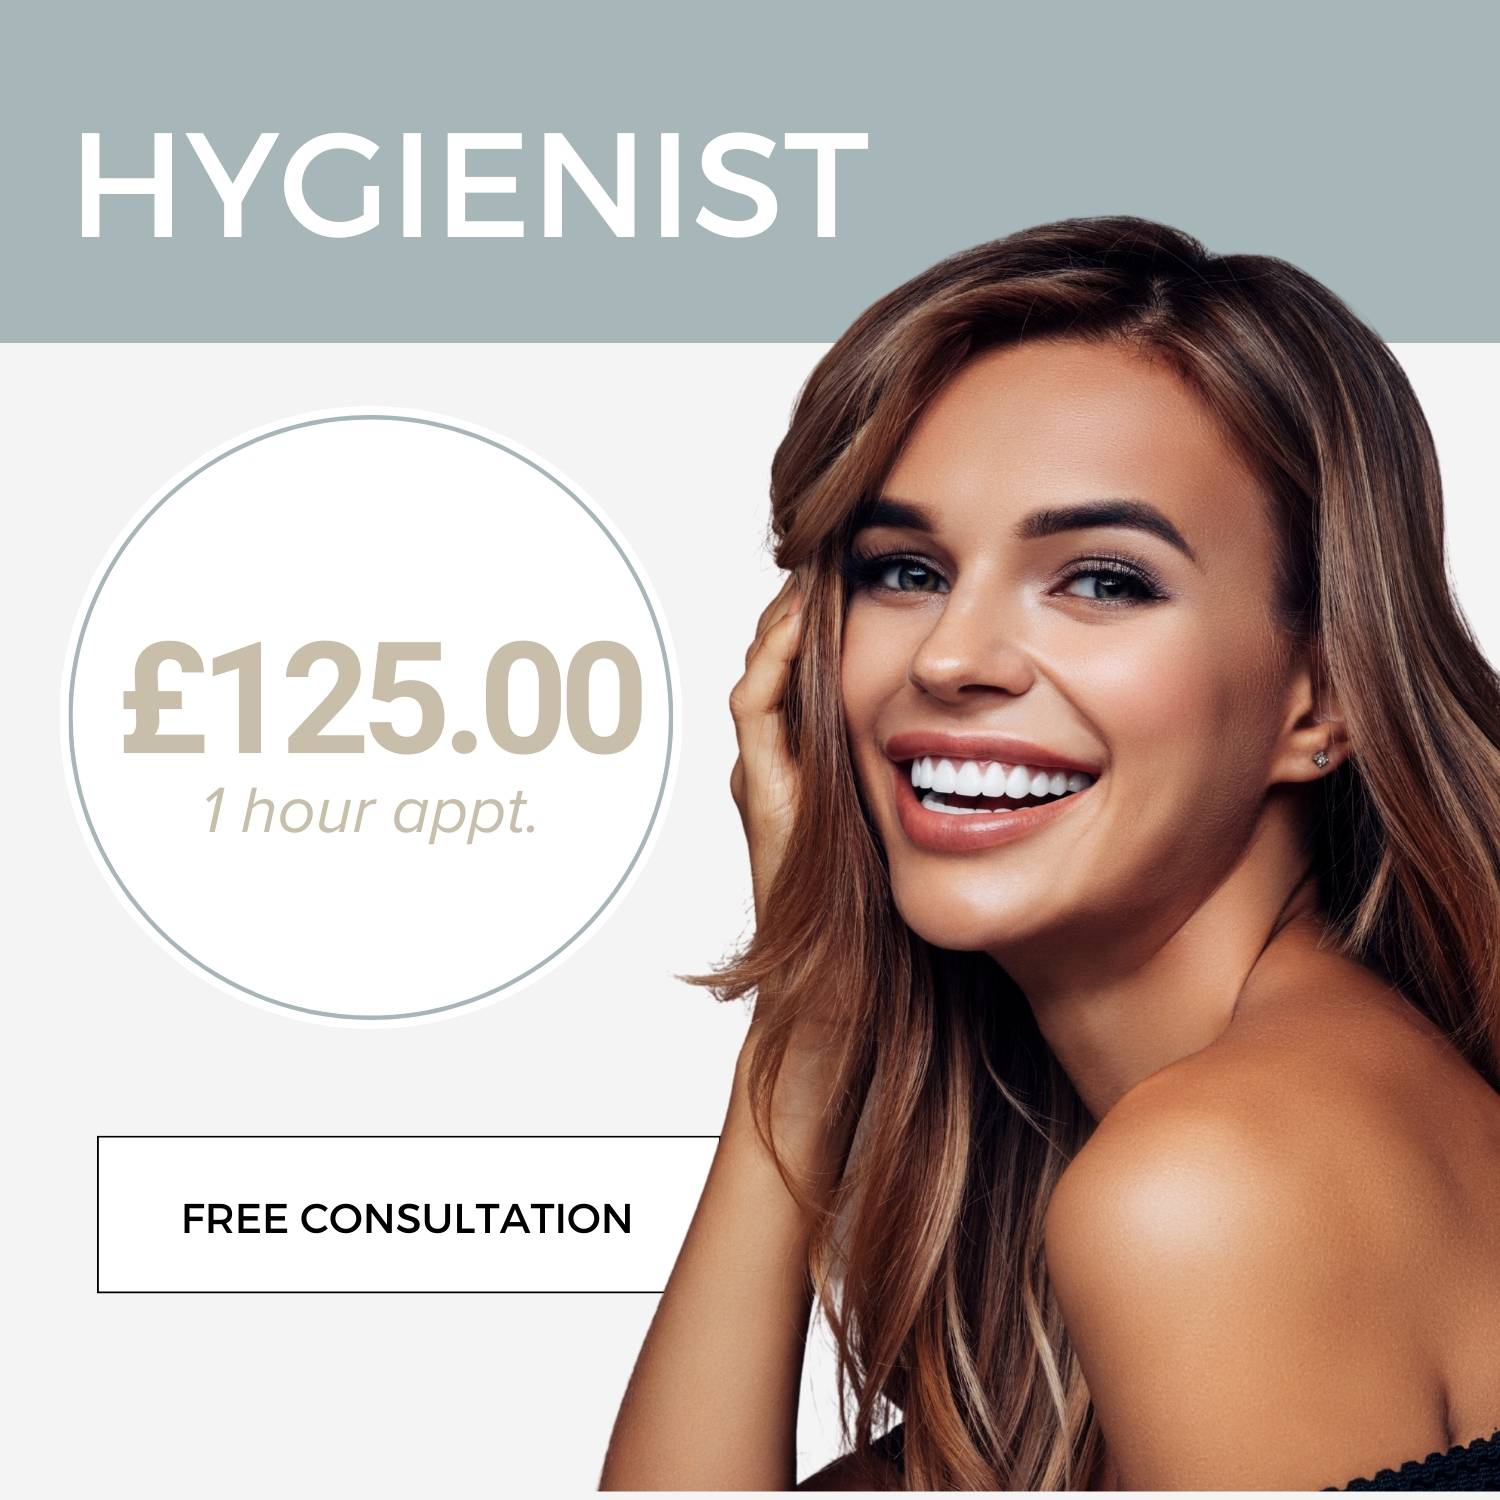 hygienist price image